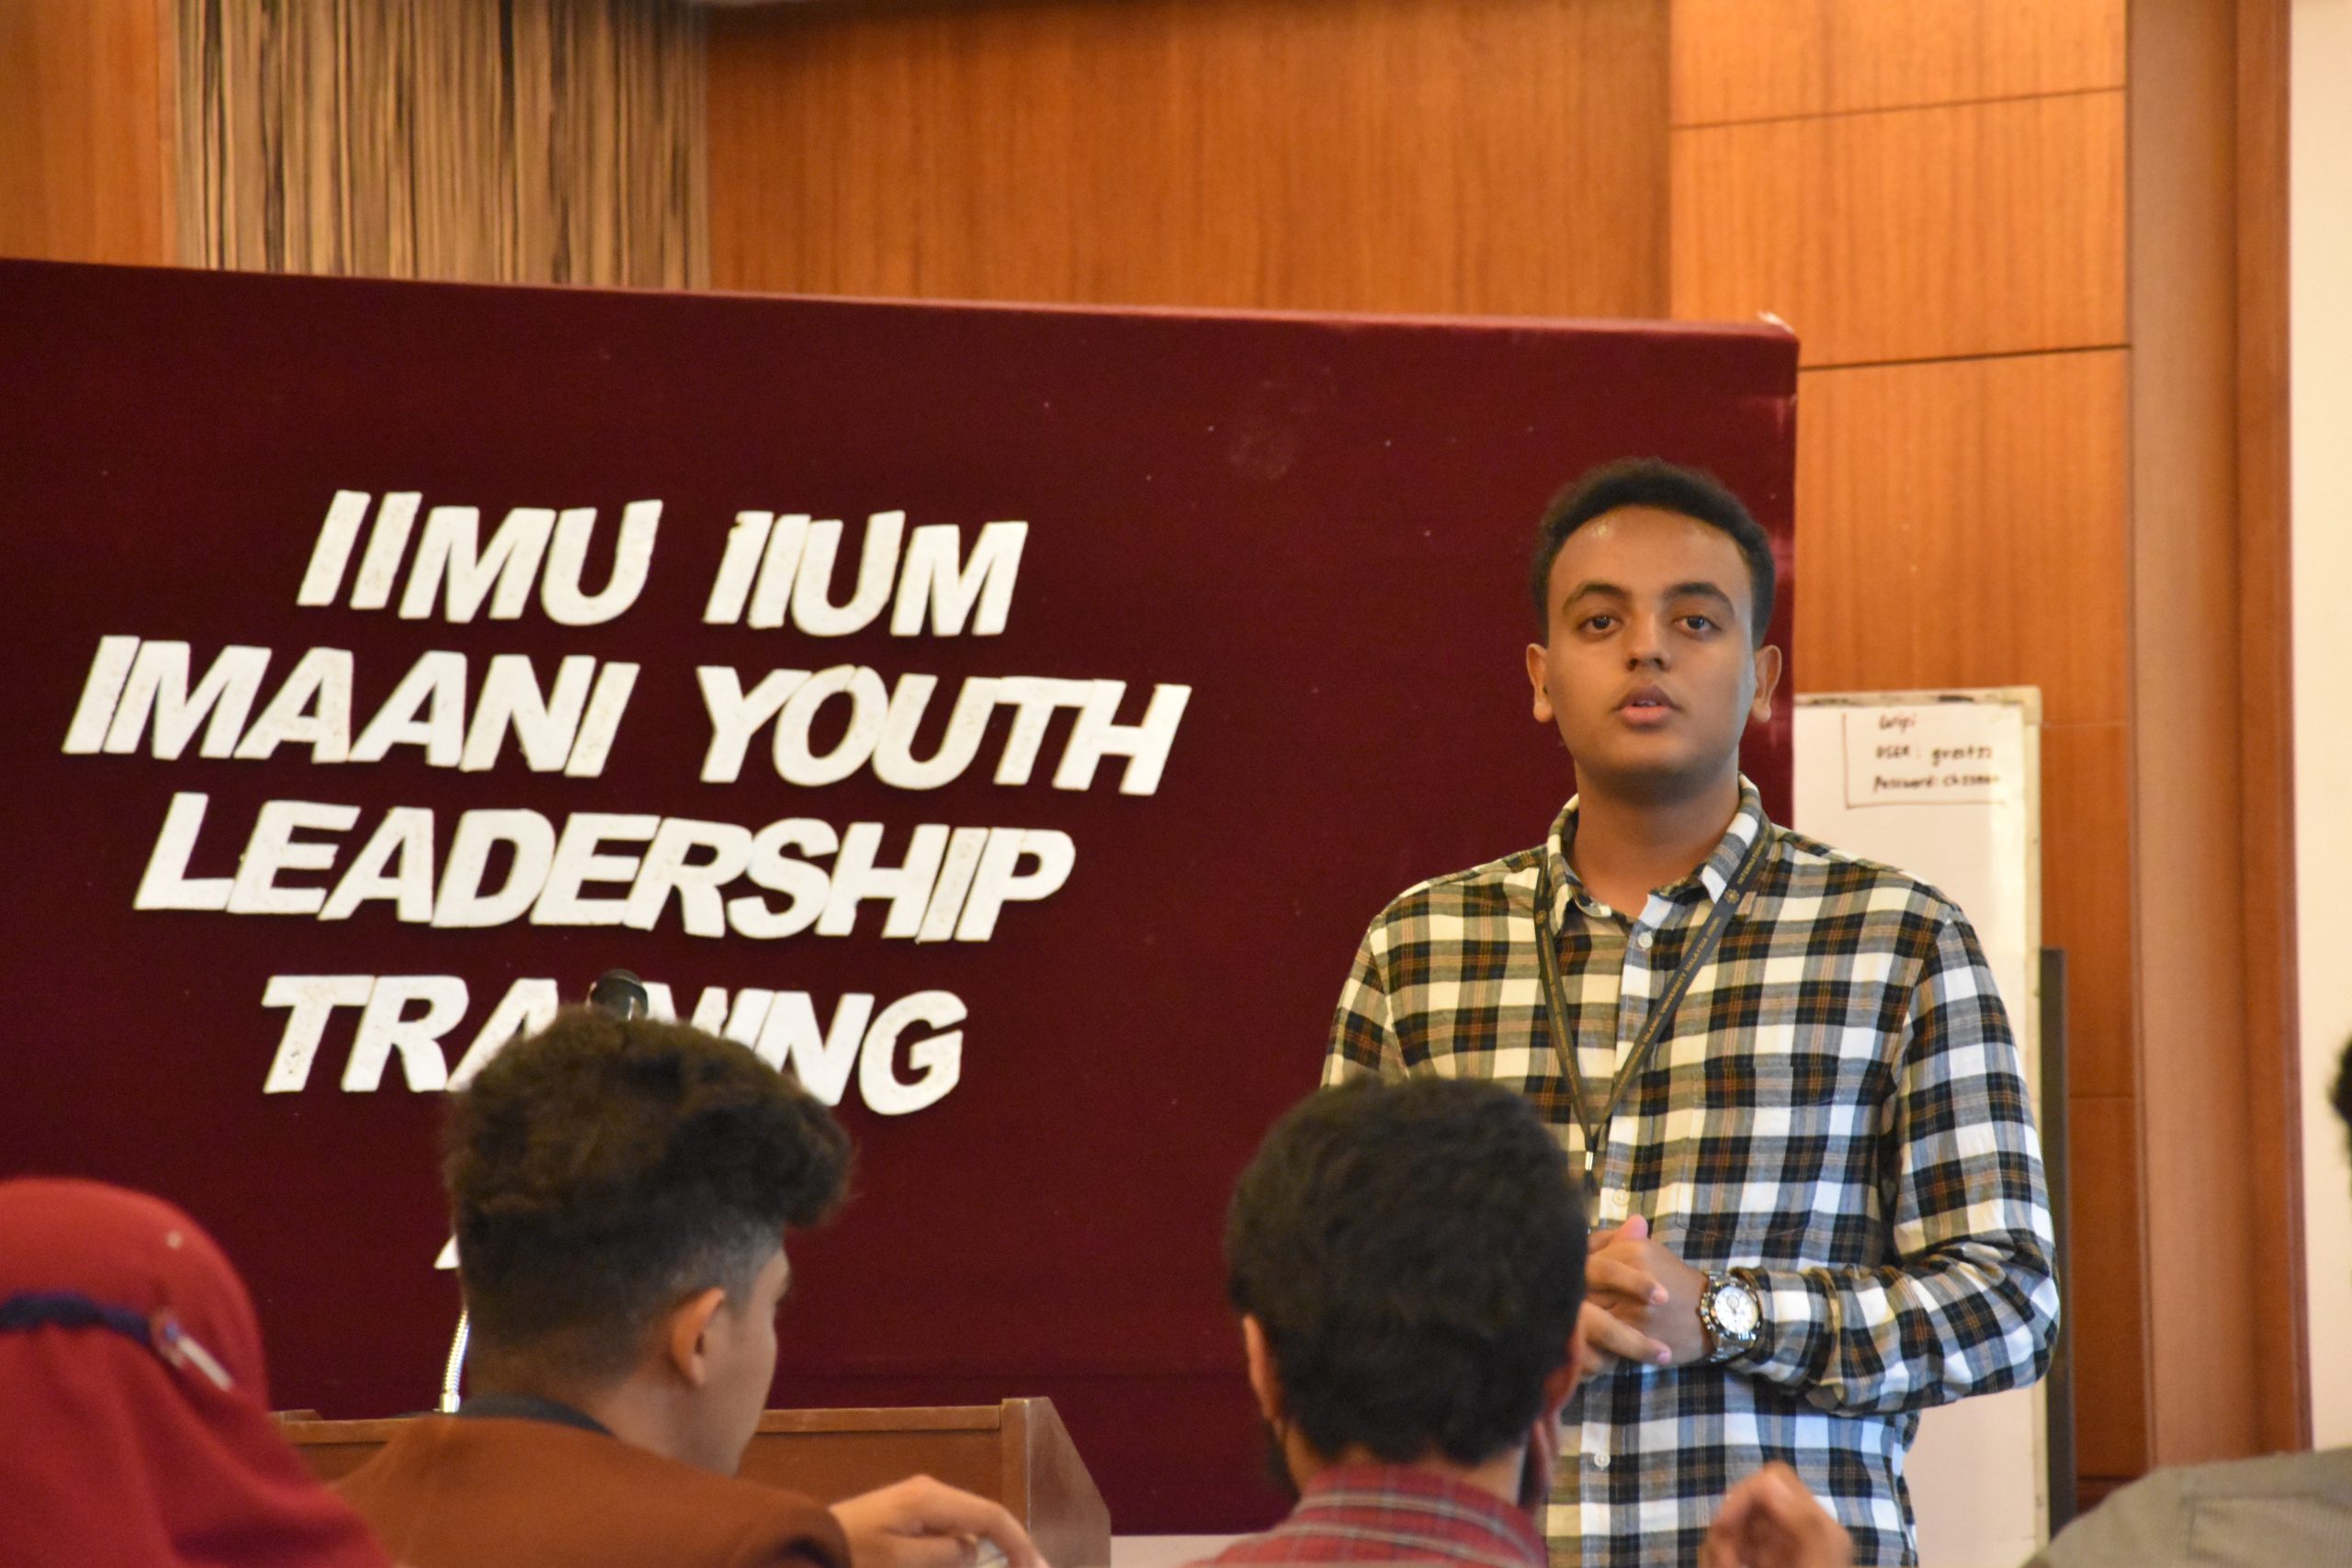 Imaani Youth Leadership Training Programme organized by IIMU in collaboration with NAMA Foundation 19-12_11_21